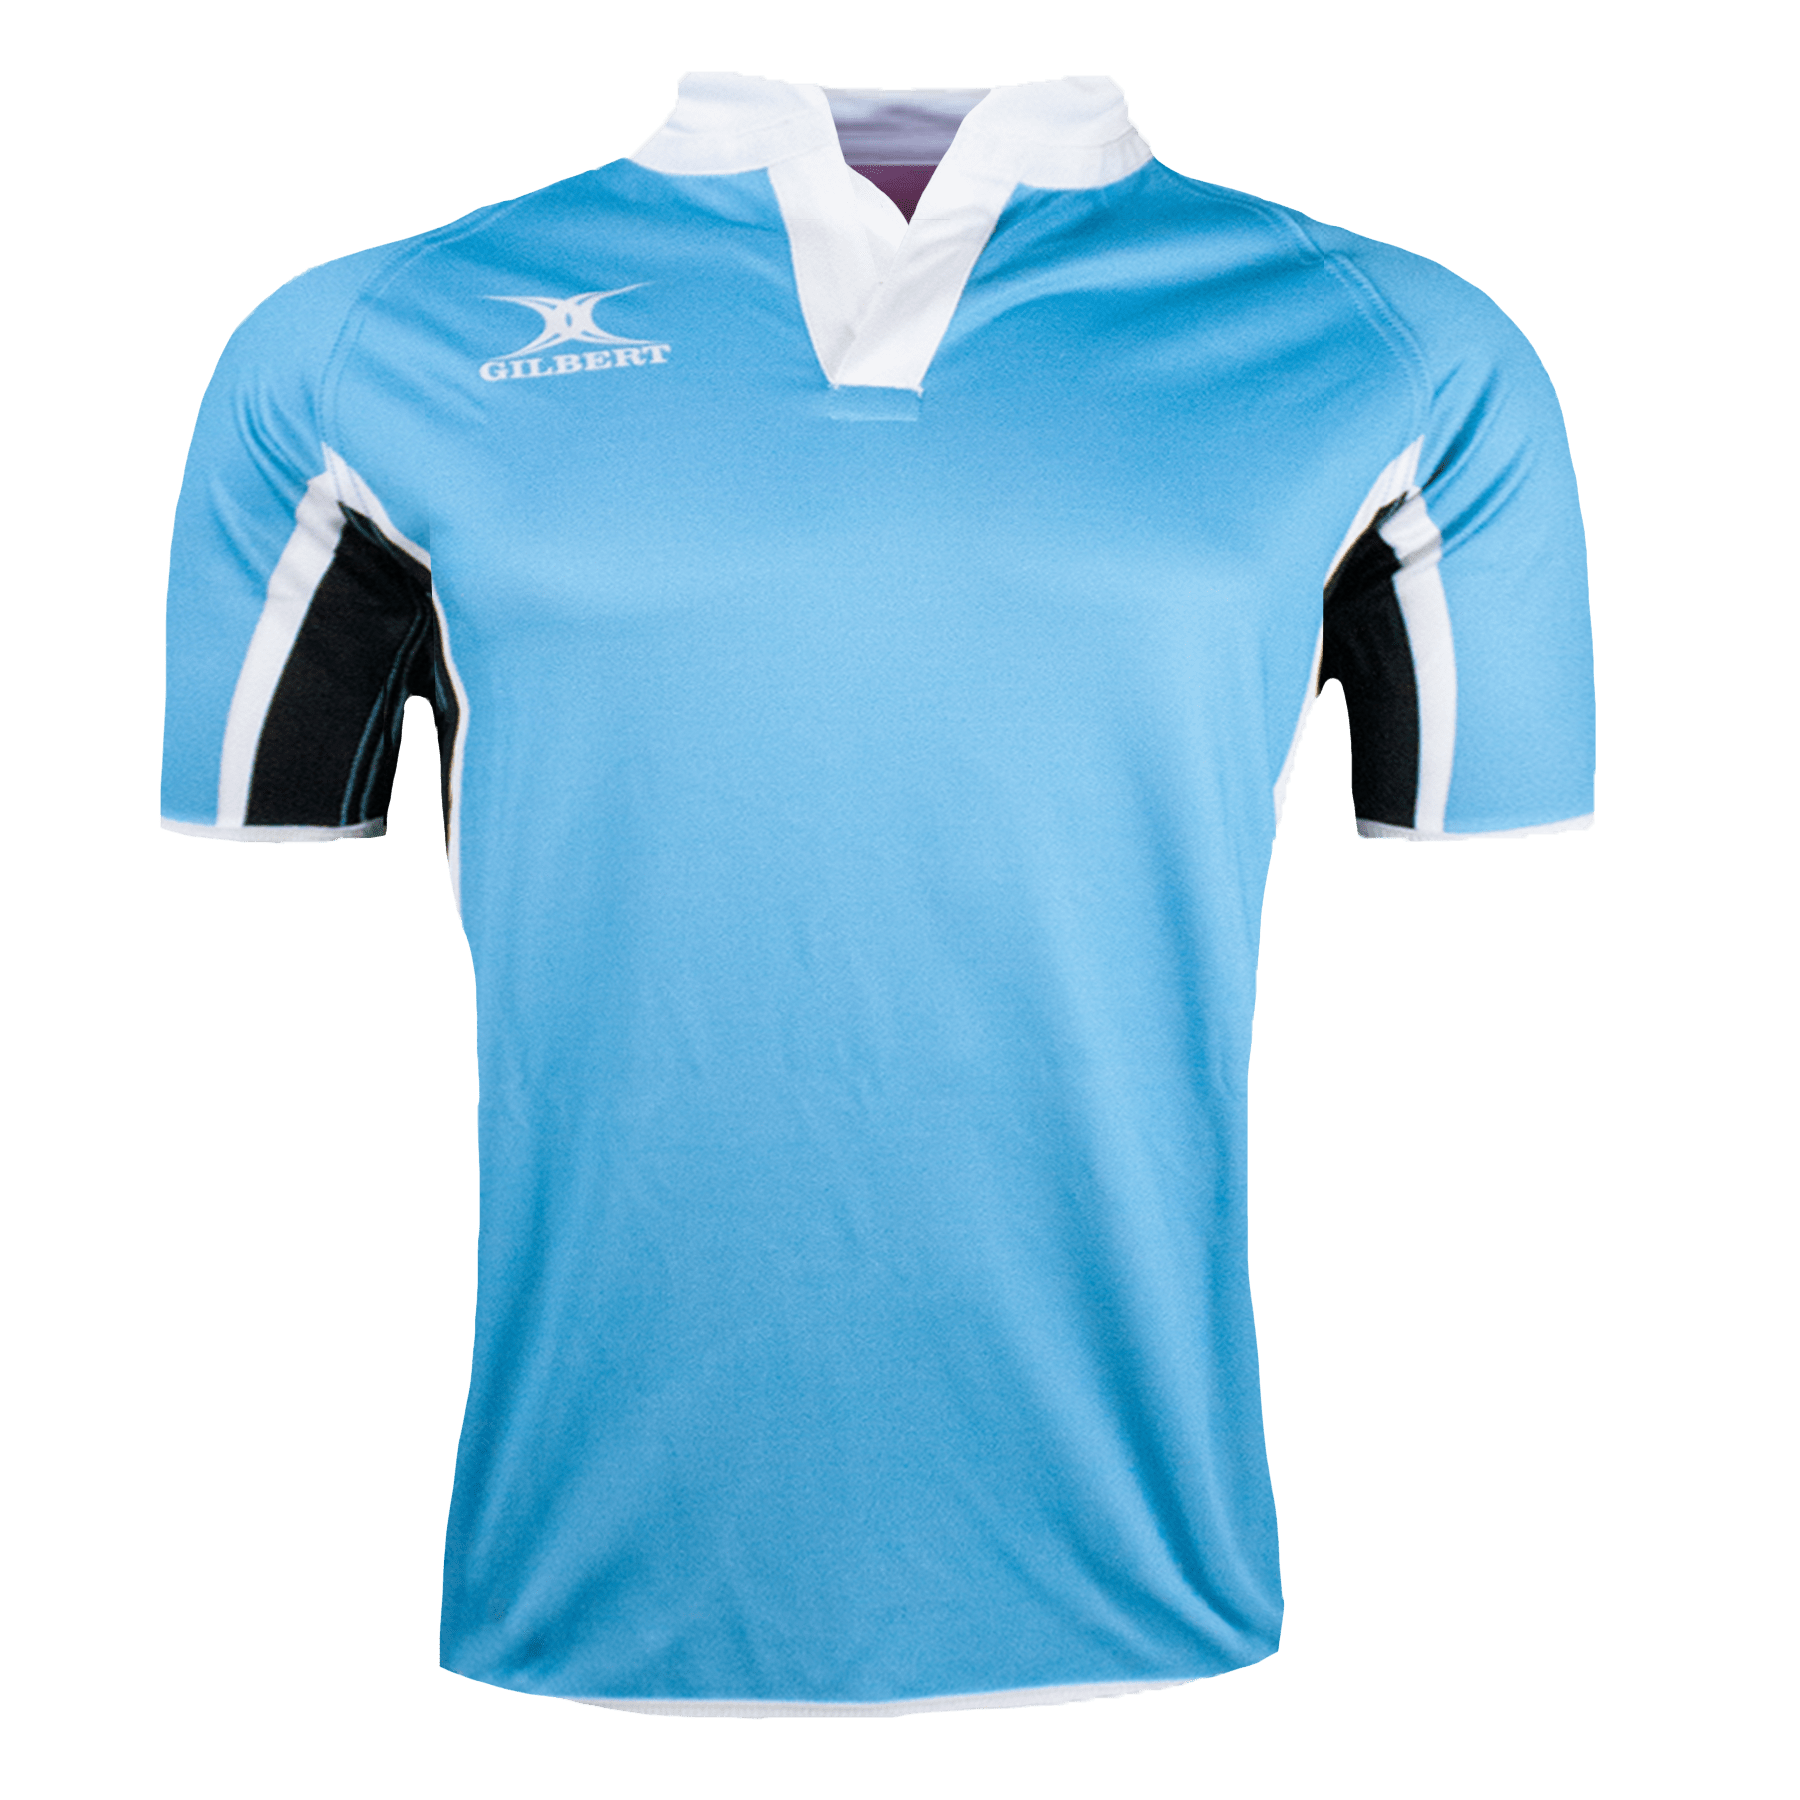 New Style* Elite Soccer Referee Jersey - PINK